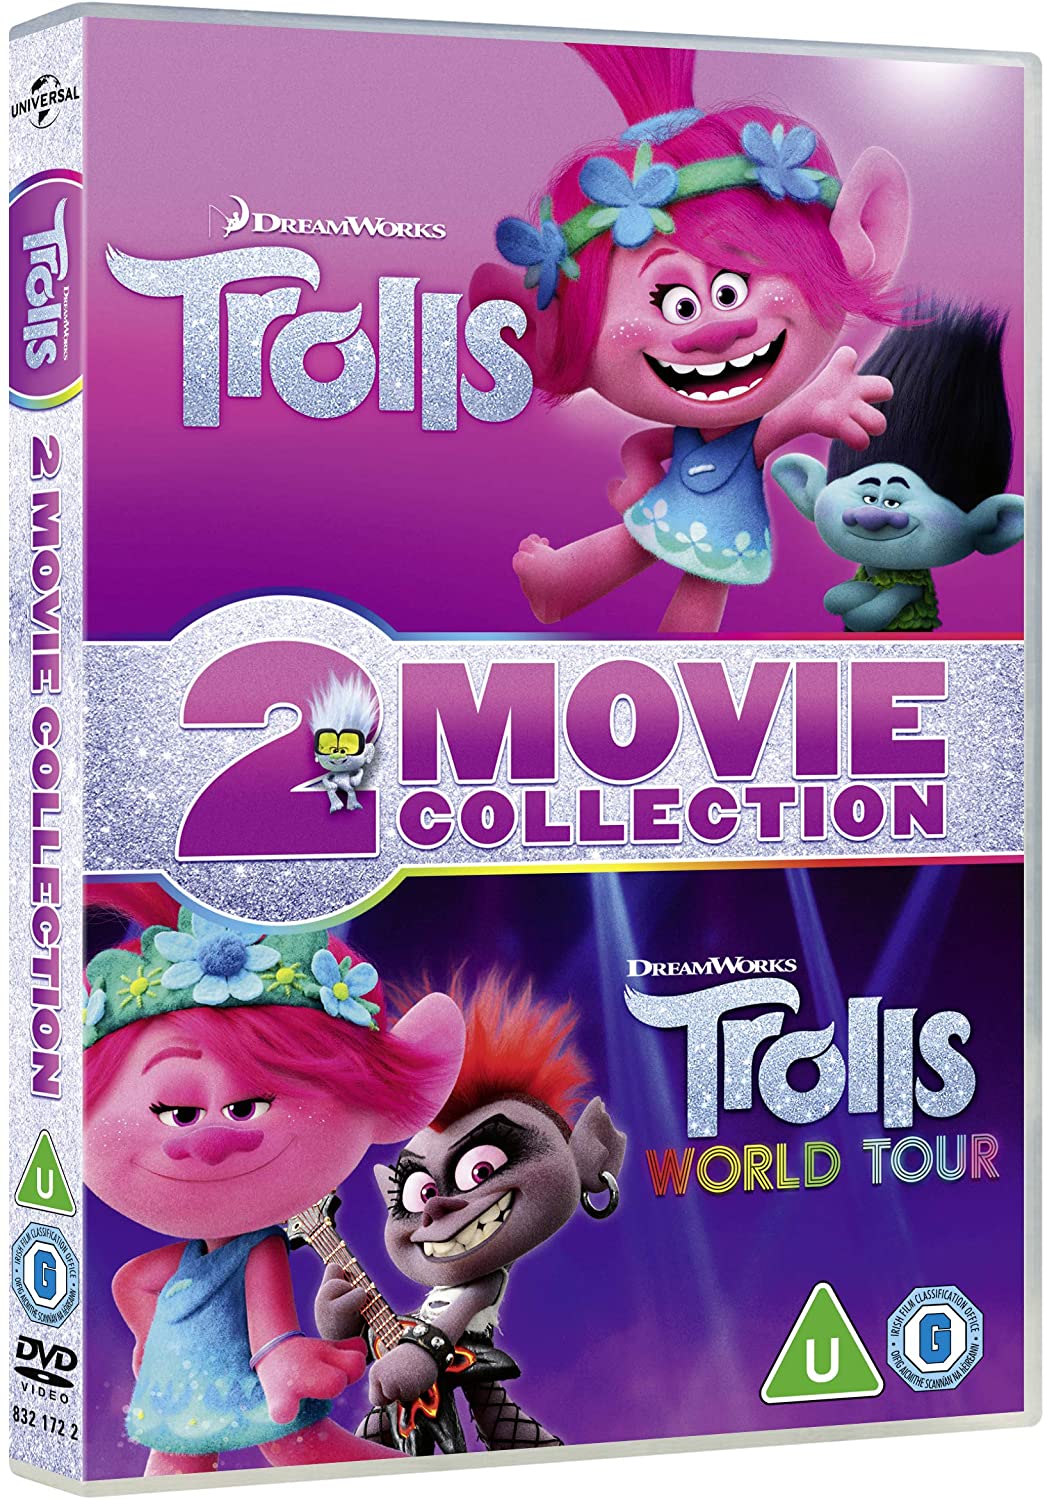 Trolls & Trolls World Tour Double Pack - Animation [DVD]